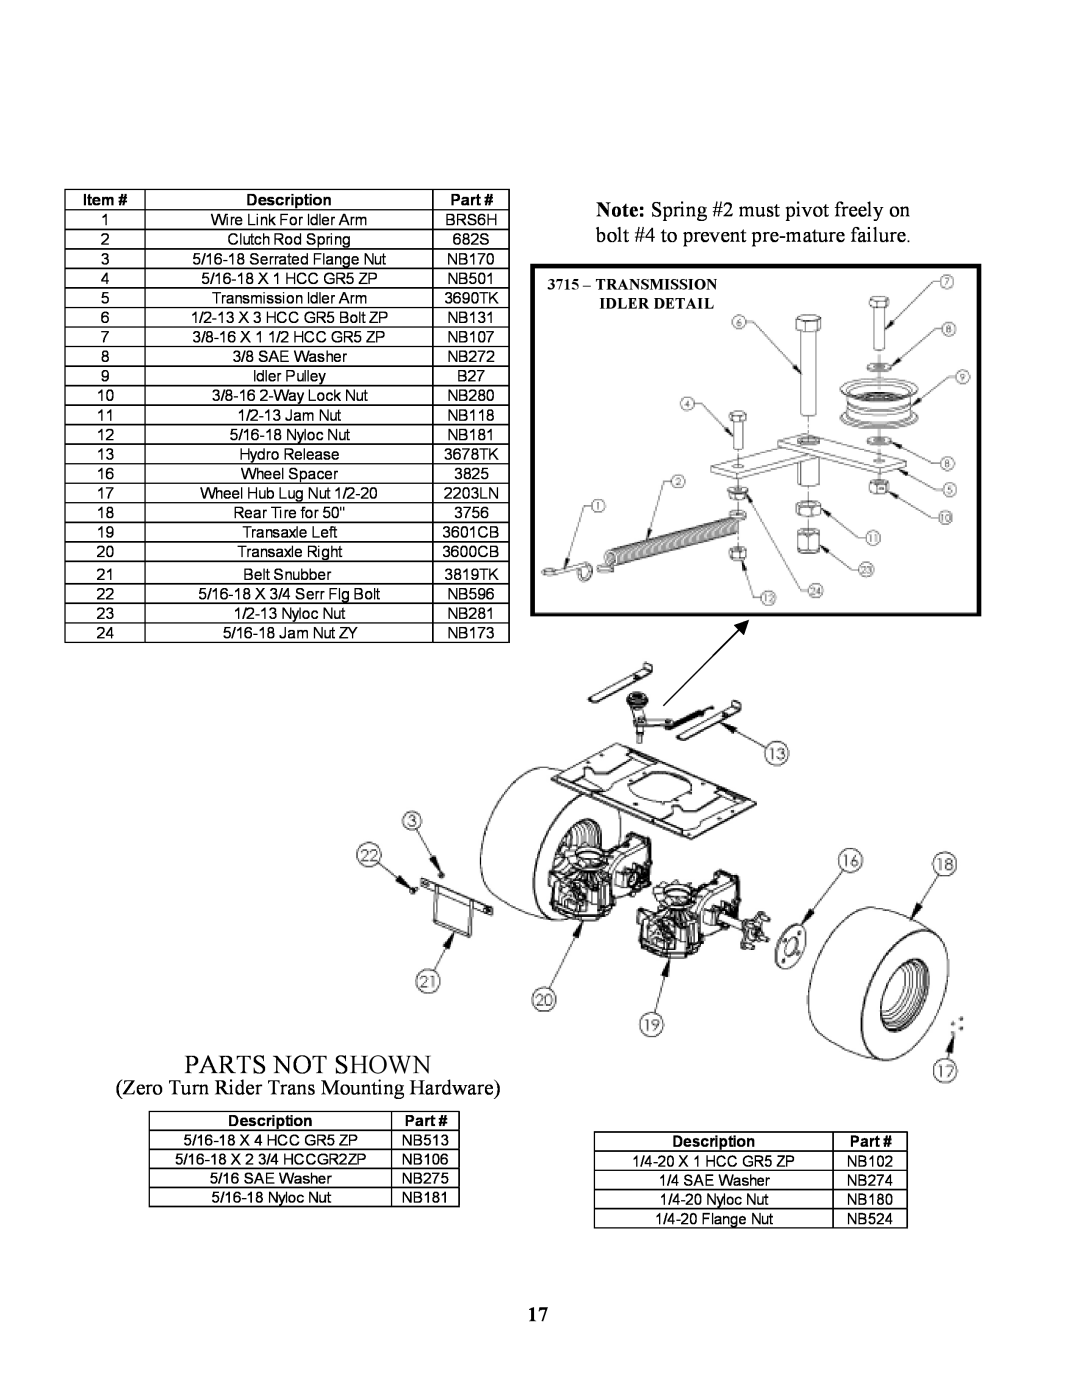 Swisher ZT2350 owner manual Parts Not Shown, Zero Turn Rider Trans Mounting Hardware 